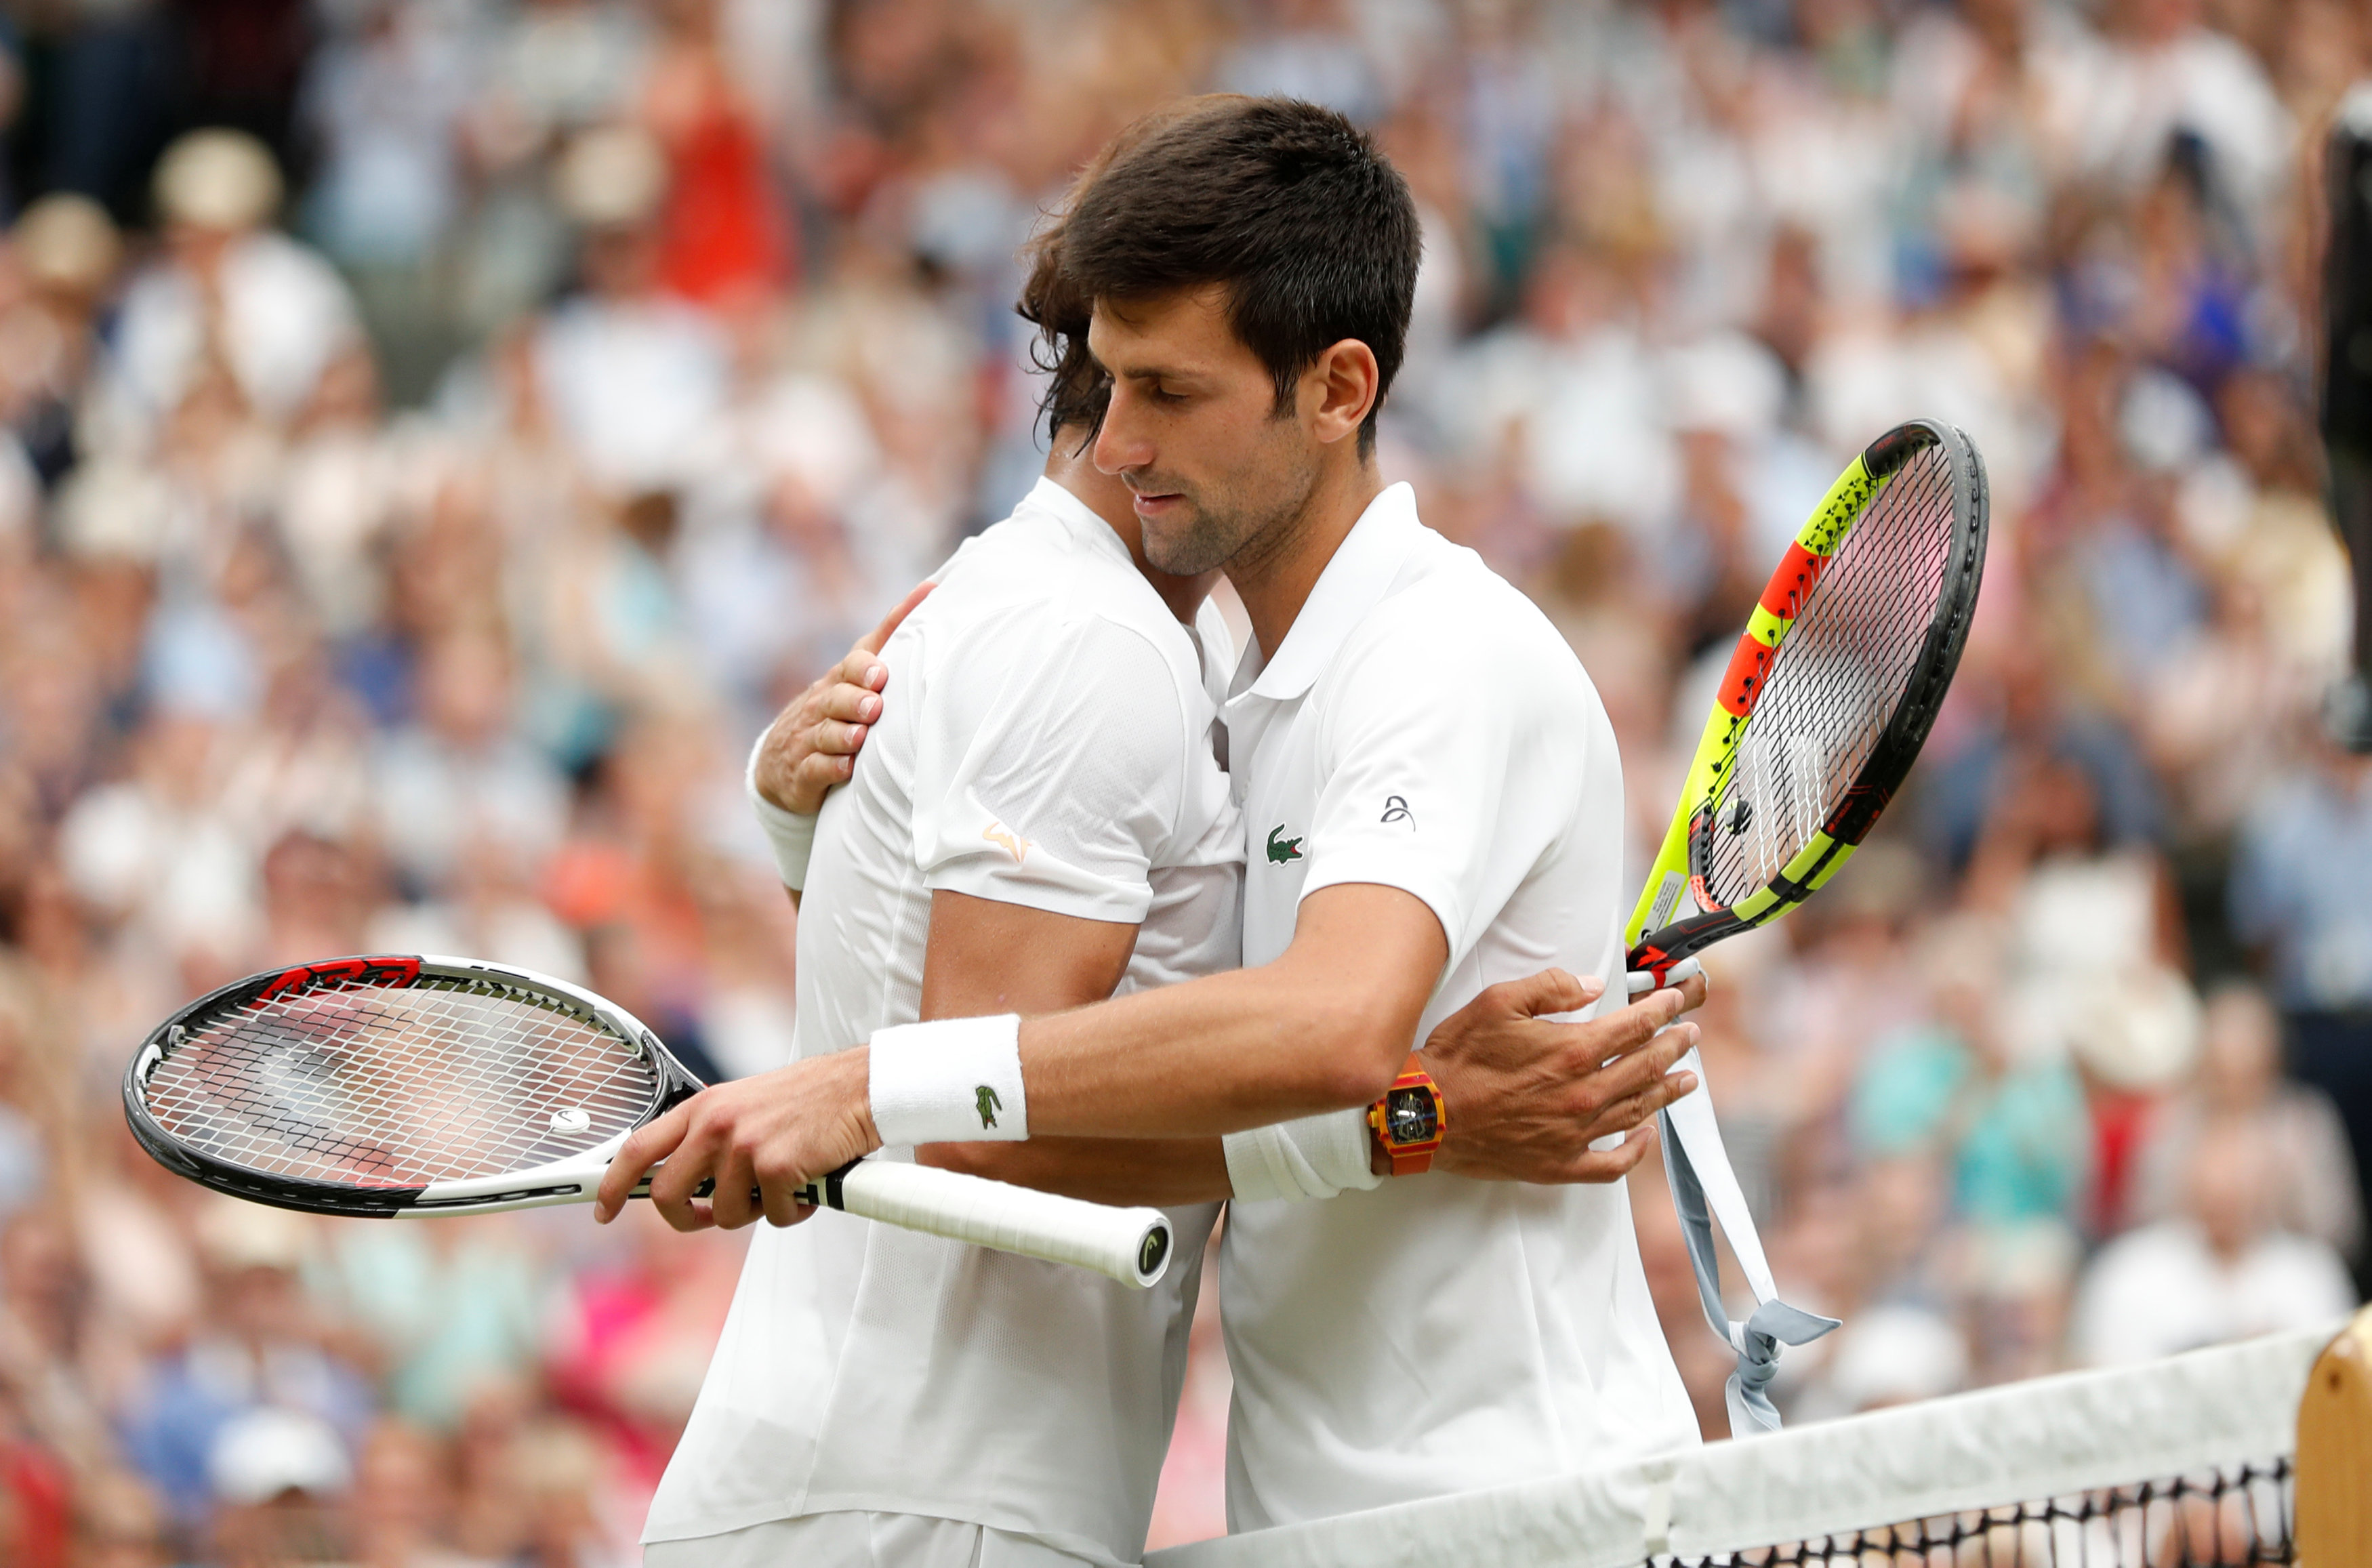 Tennis: Djokovic outlasts Nadal in classic Wimbledon semi-final